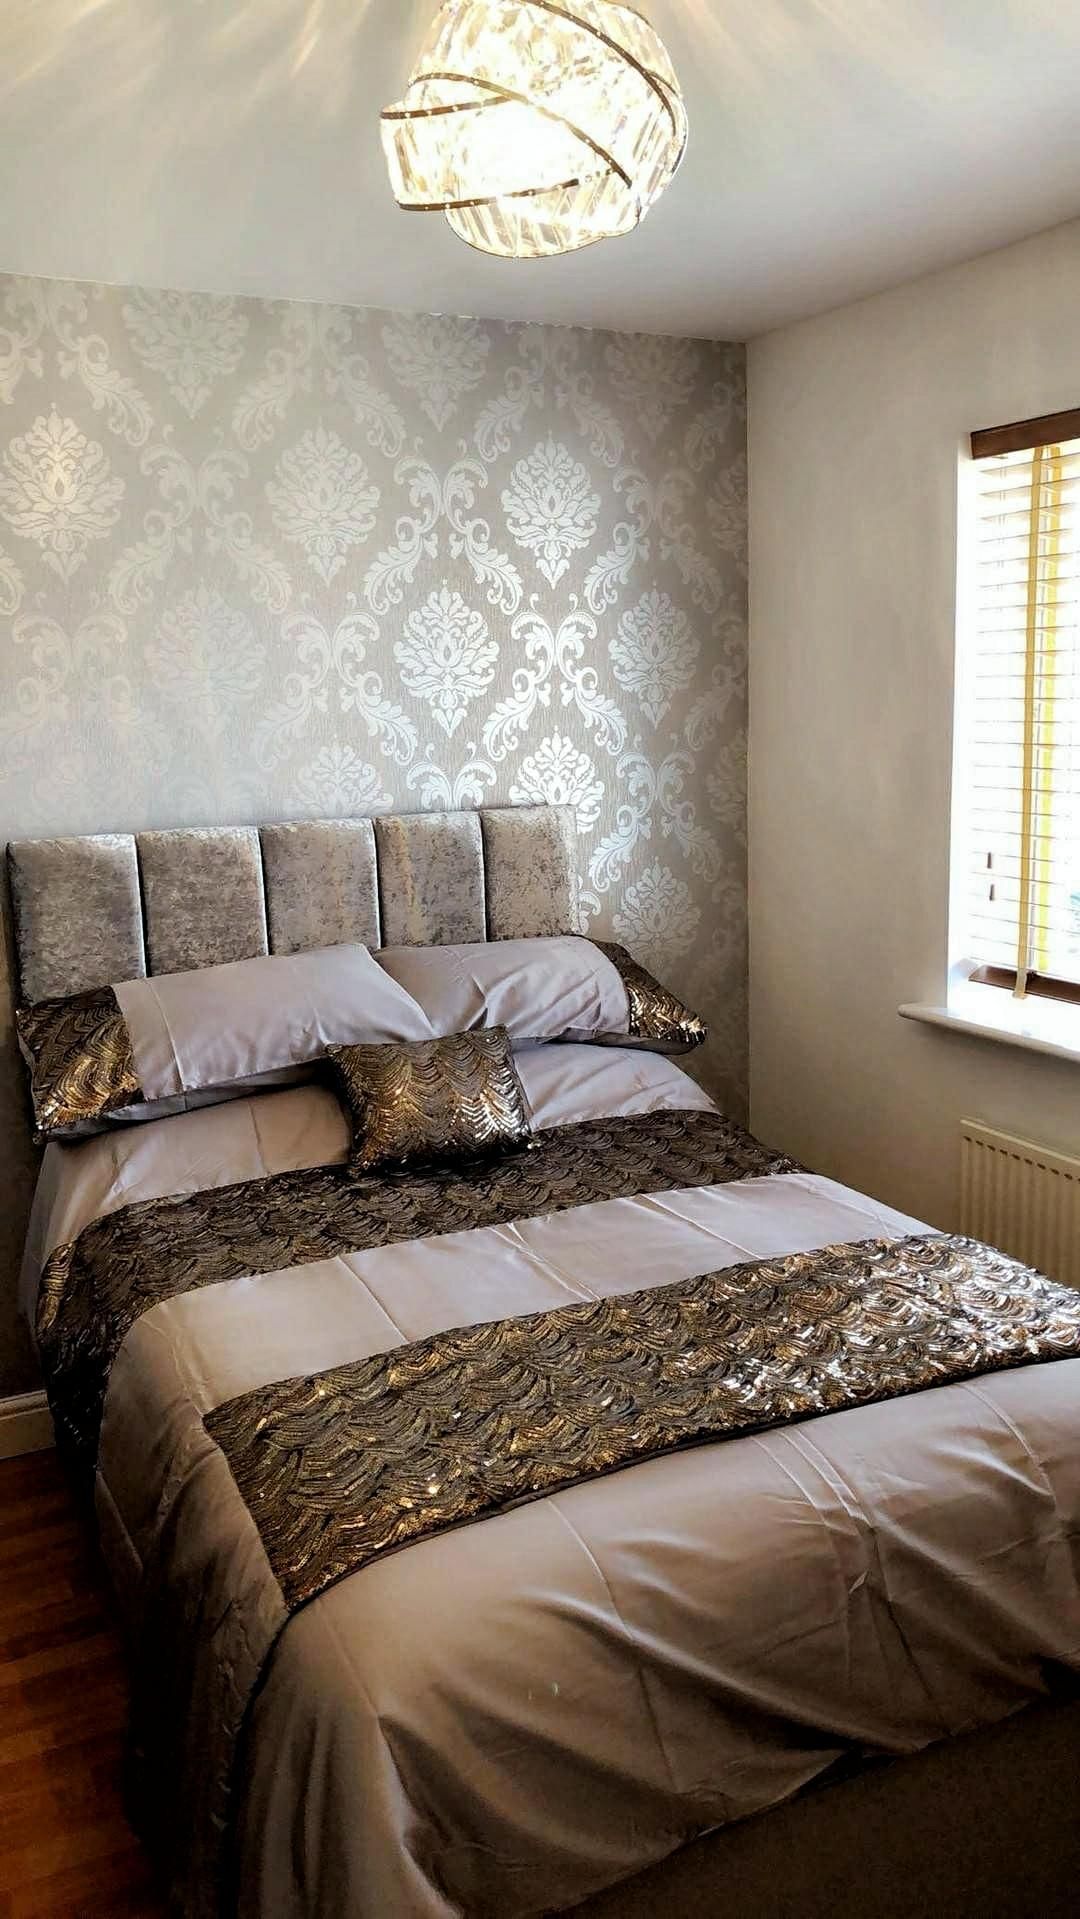 chelsea wallpaper for bedrooms,bedroom,bed,furniture,room,bed sheet